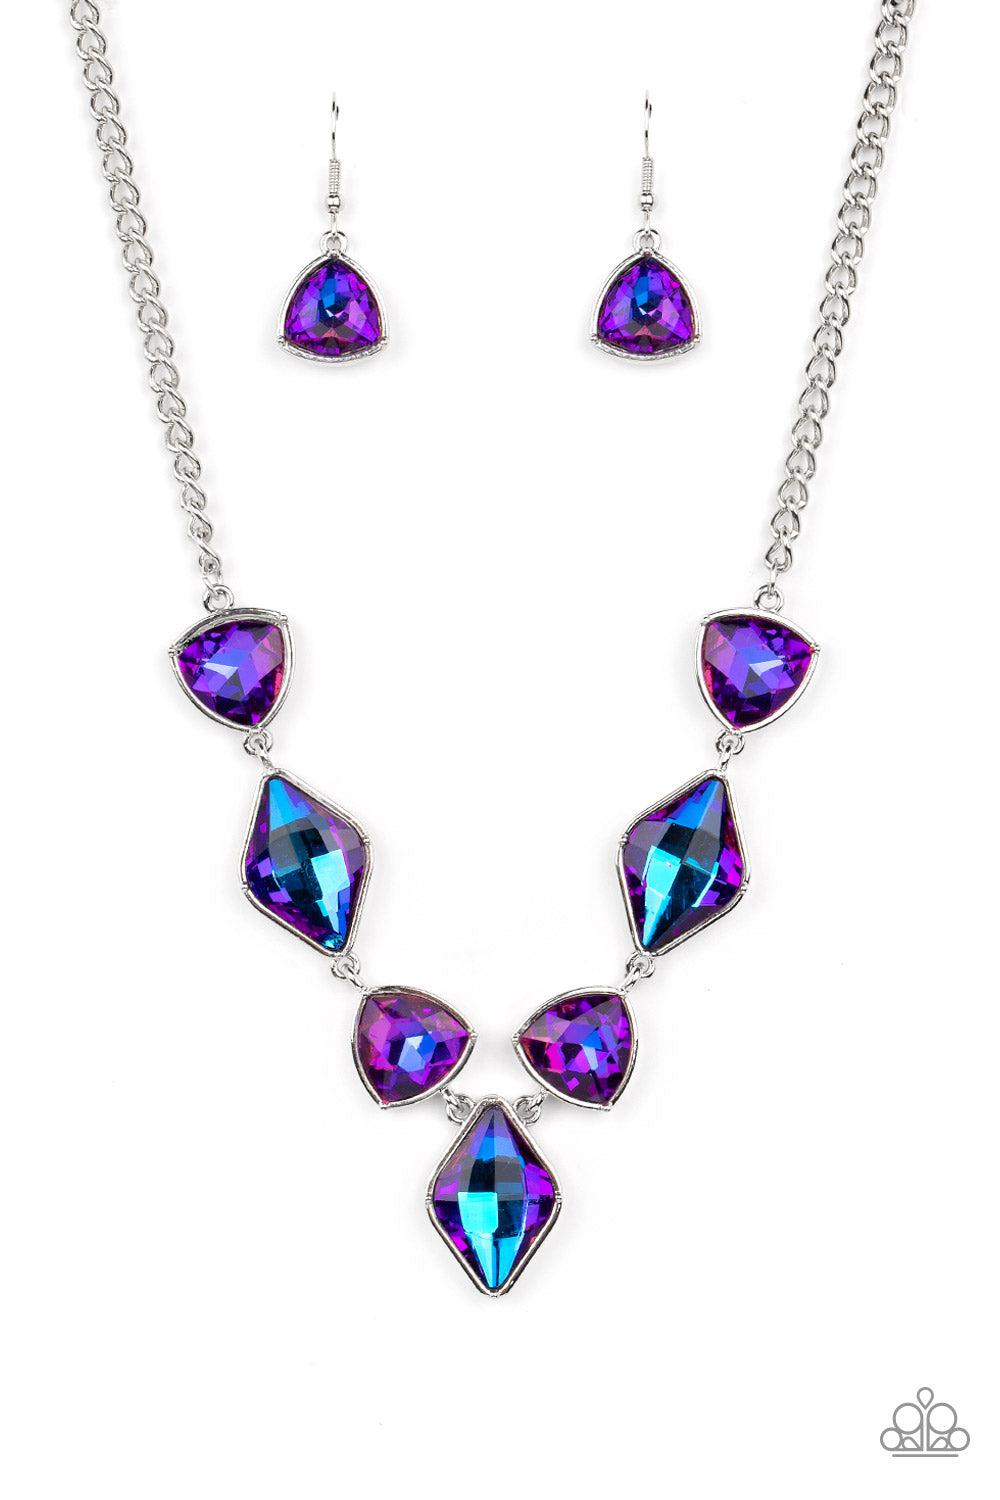 Glittering Geometrics Blue Necklace - Paparazzi Accessories- lightbox - CarasShop.com - $5 Jewelry by Cara Jewels